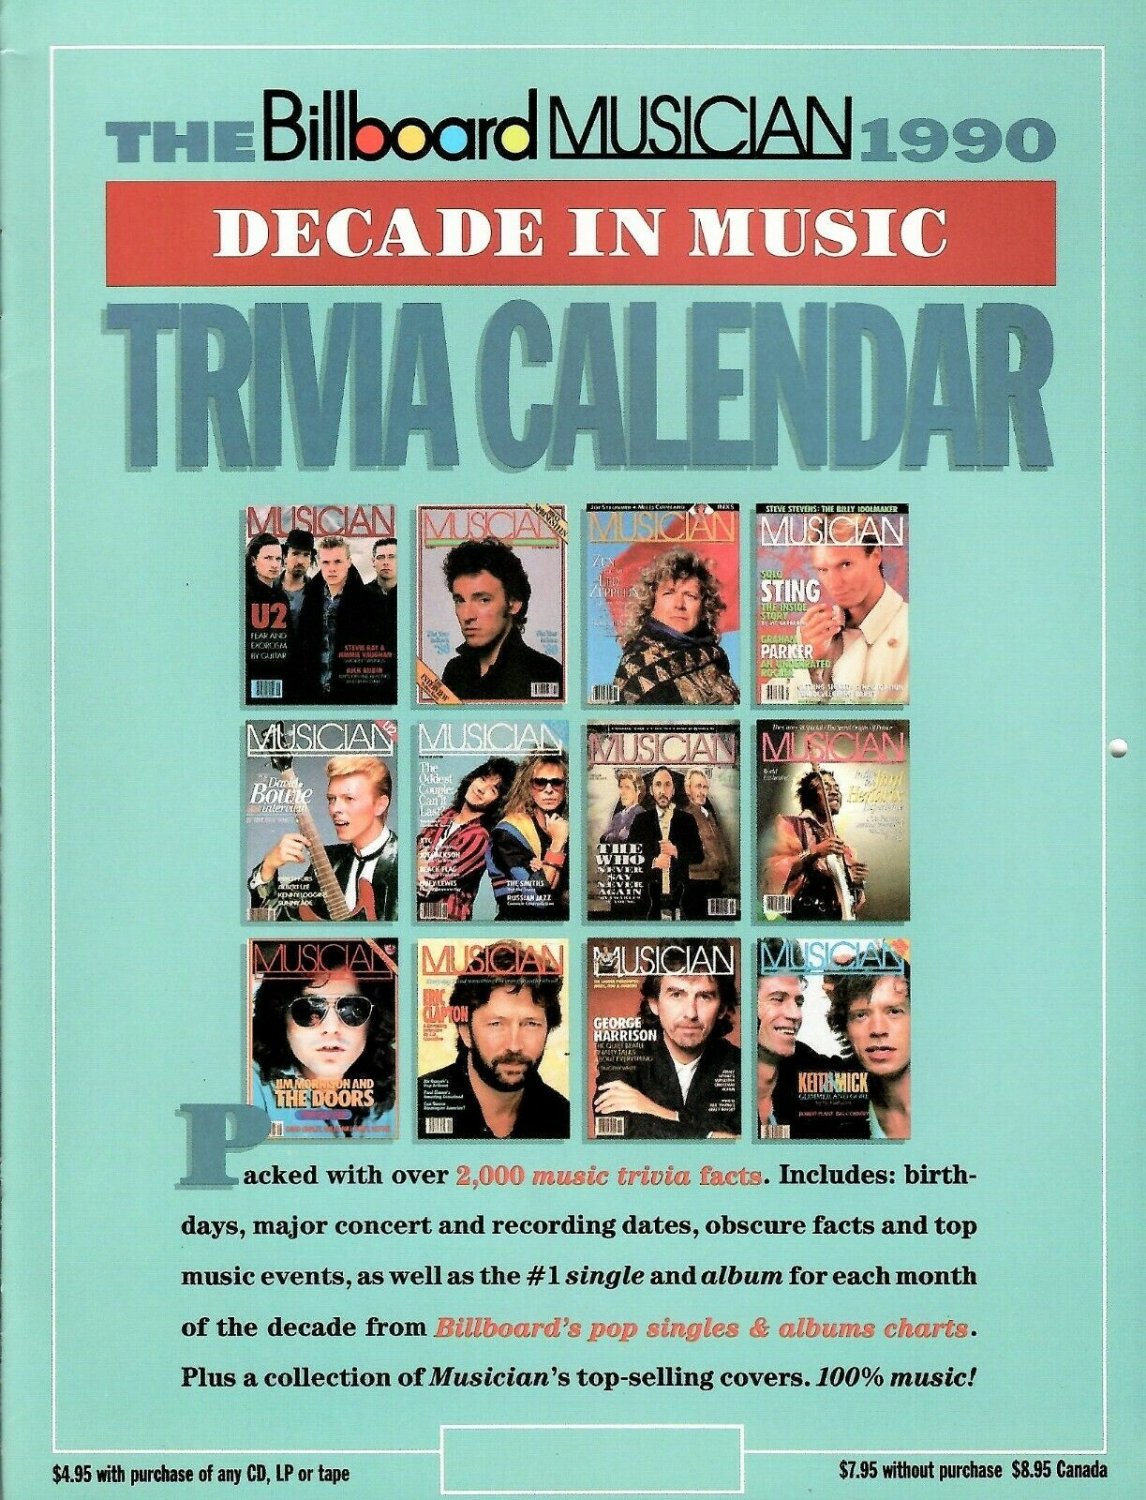 THE BILLBOARD MUSICIAN MAGAZINE 1990 Decade In Music Trivia Calendar